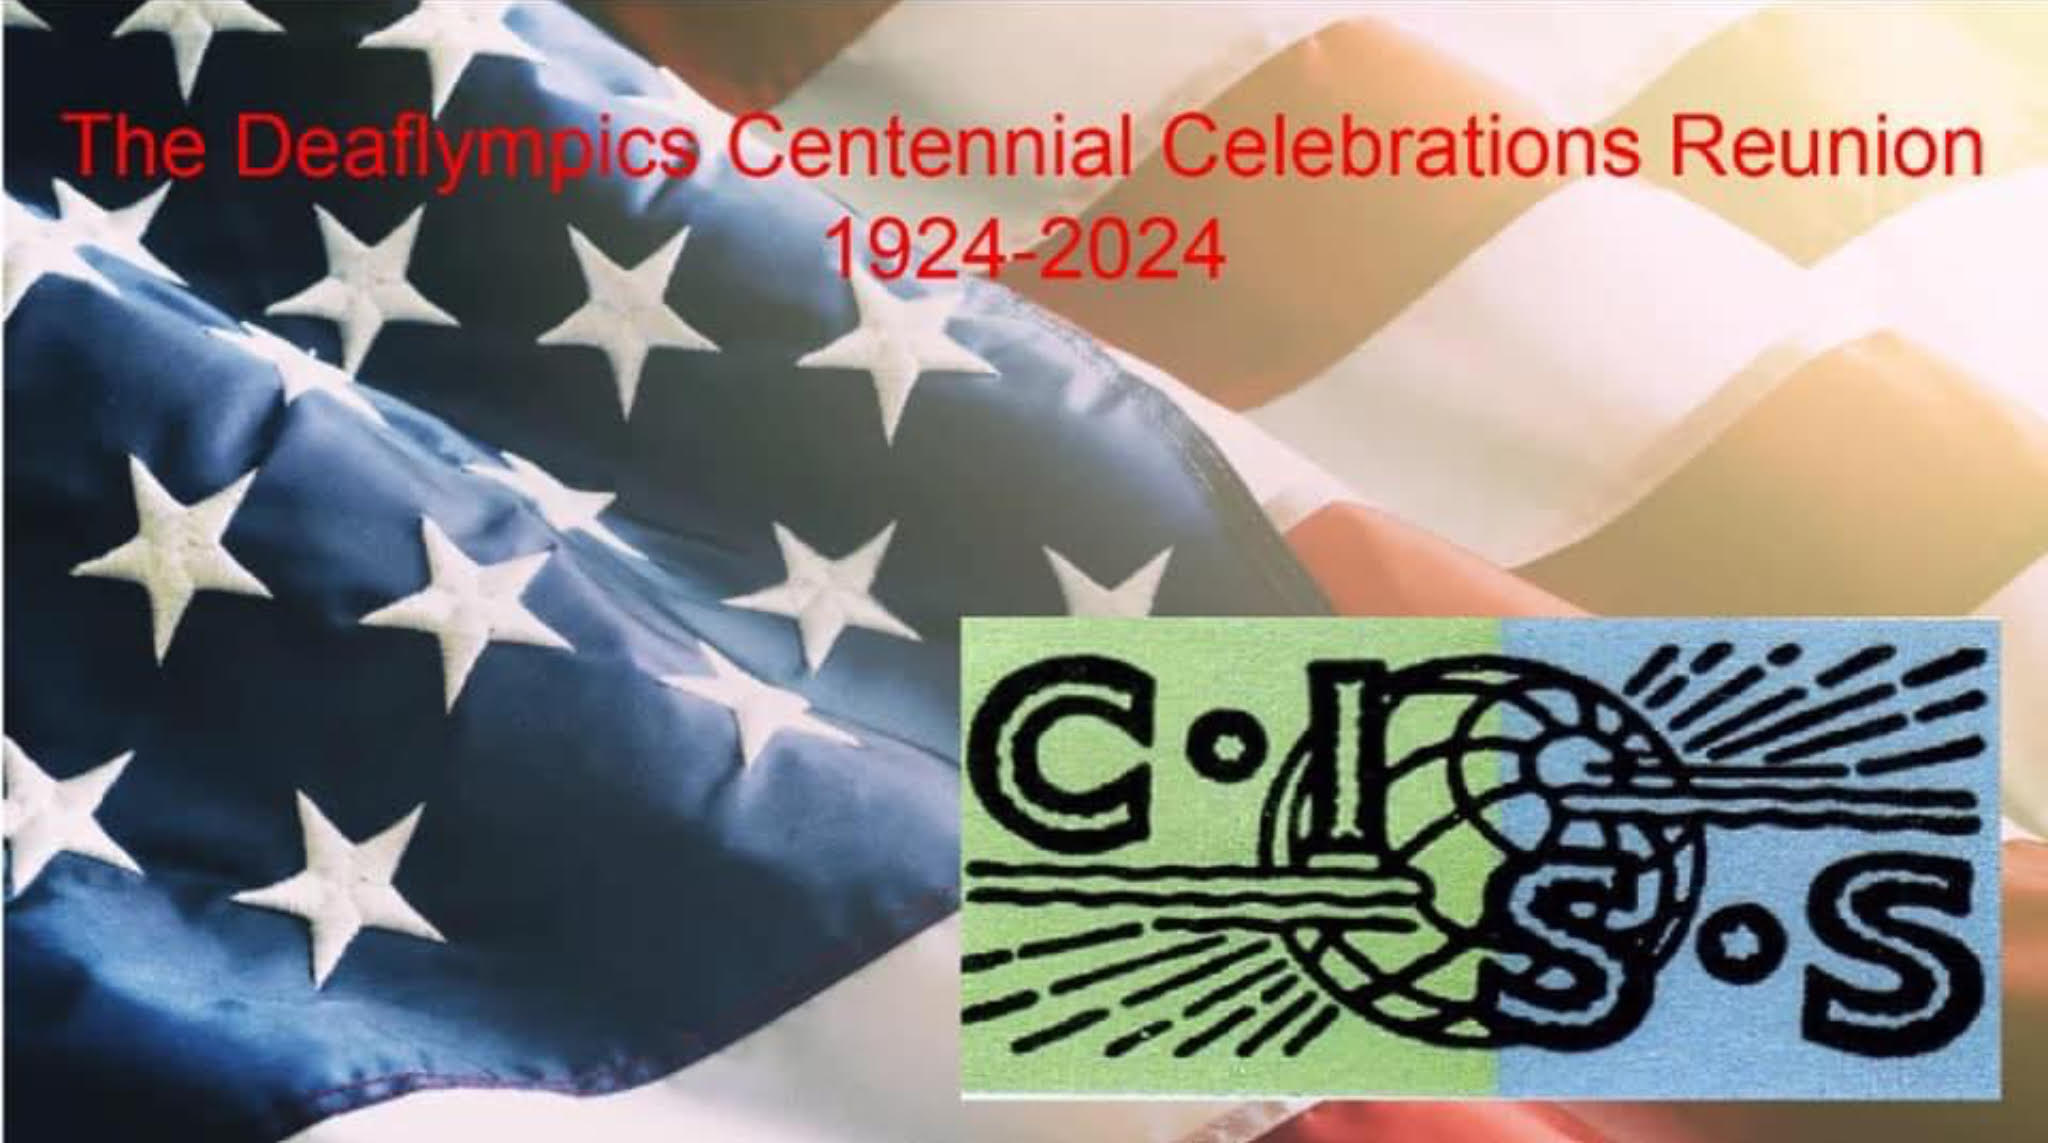 The US Deaflympics Centennial Celebrations